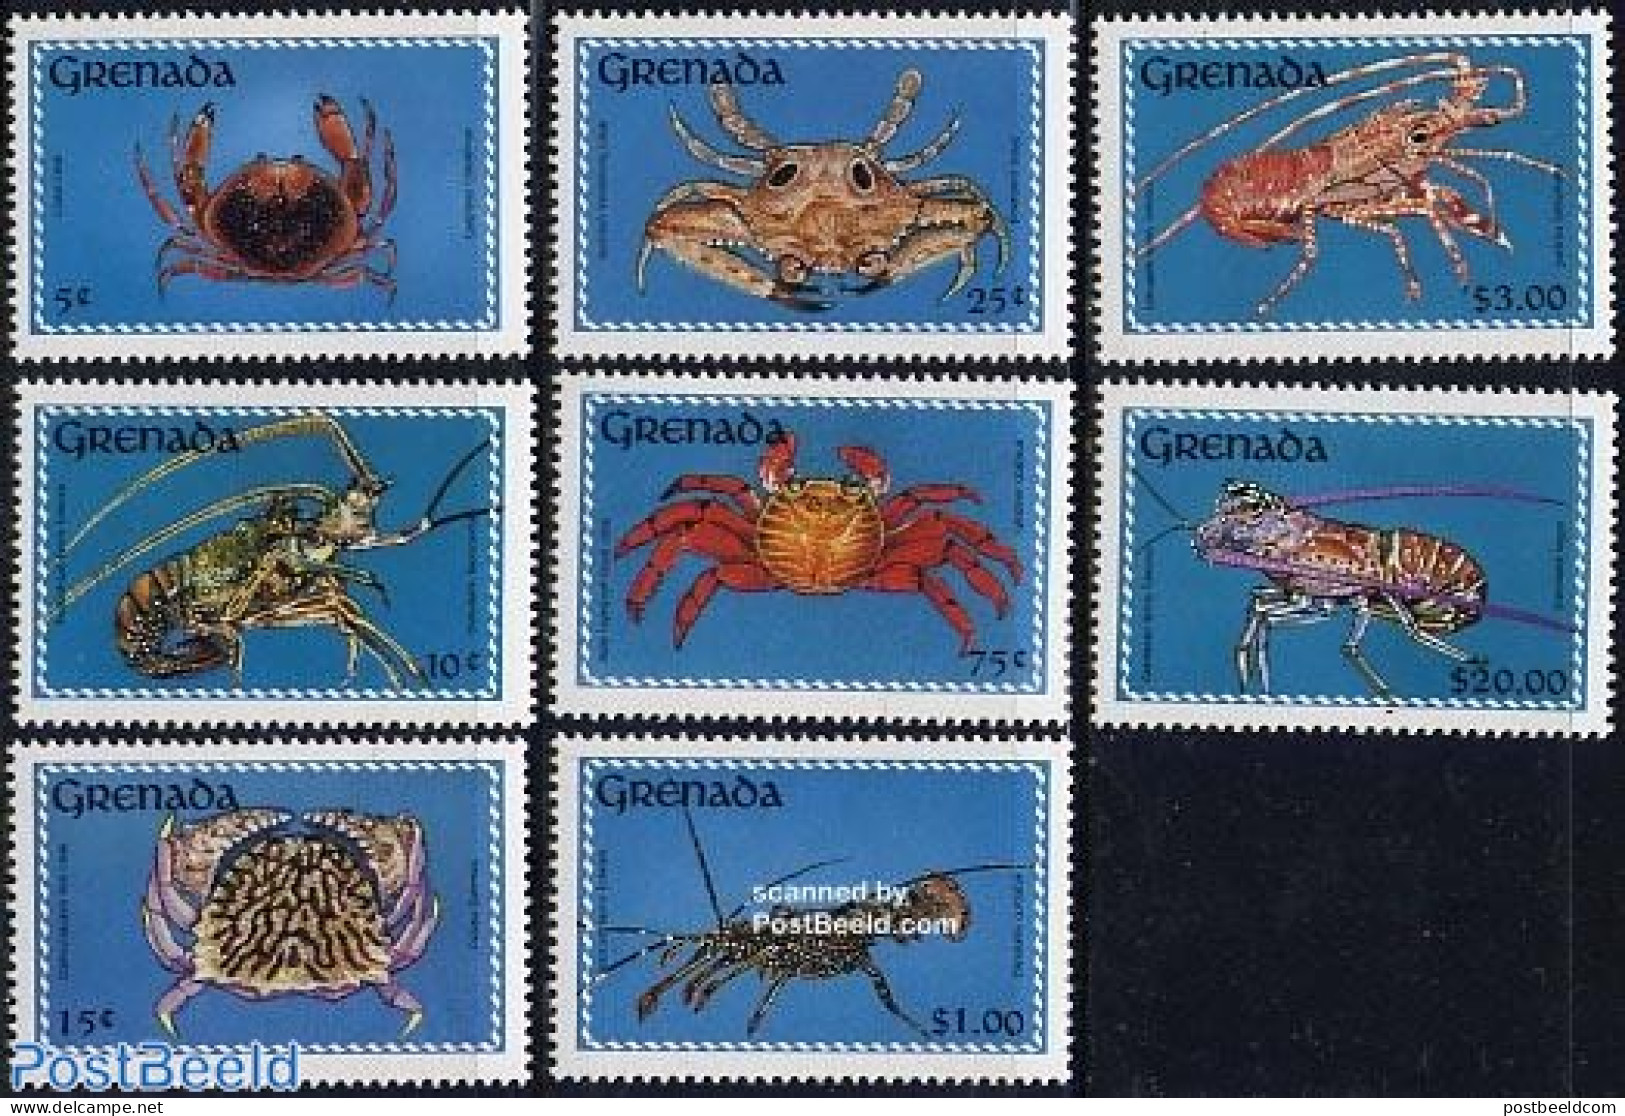 Grenada 1990 Crabs 8v, Mint NH, Nature - Shells & Crustaceans - Crabs And Lobsters - Marine Life